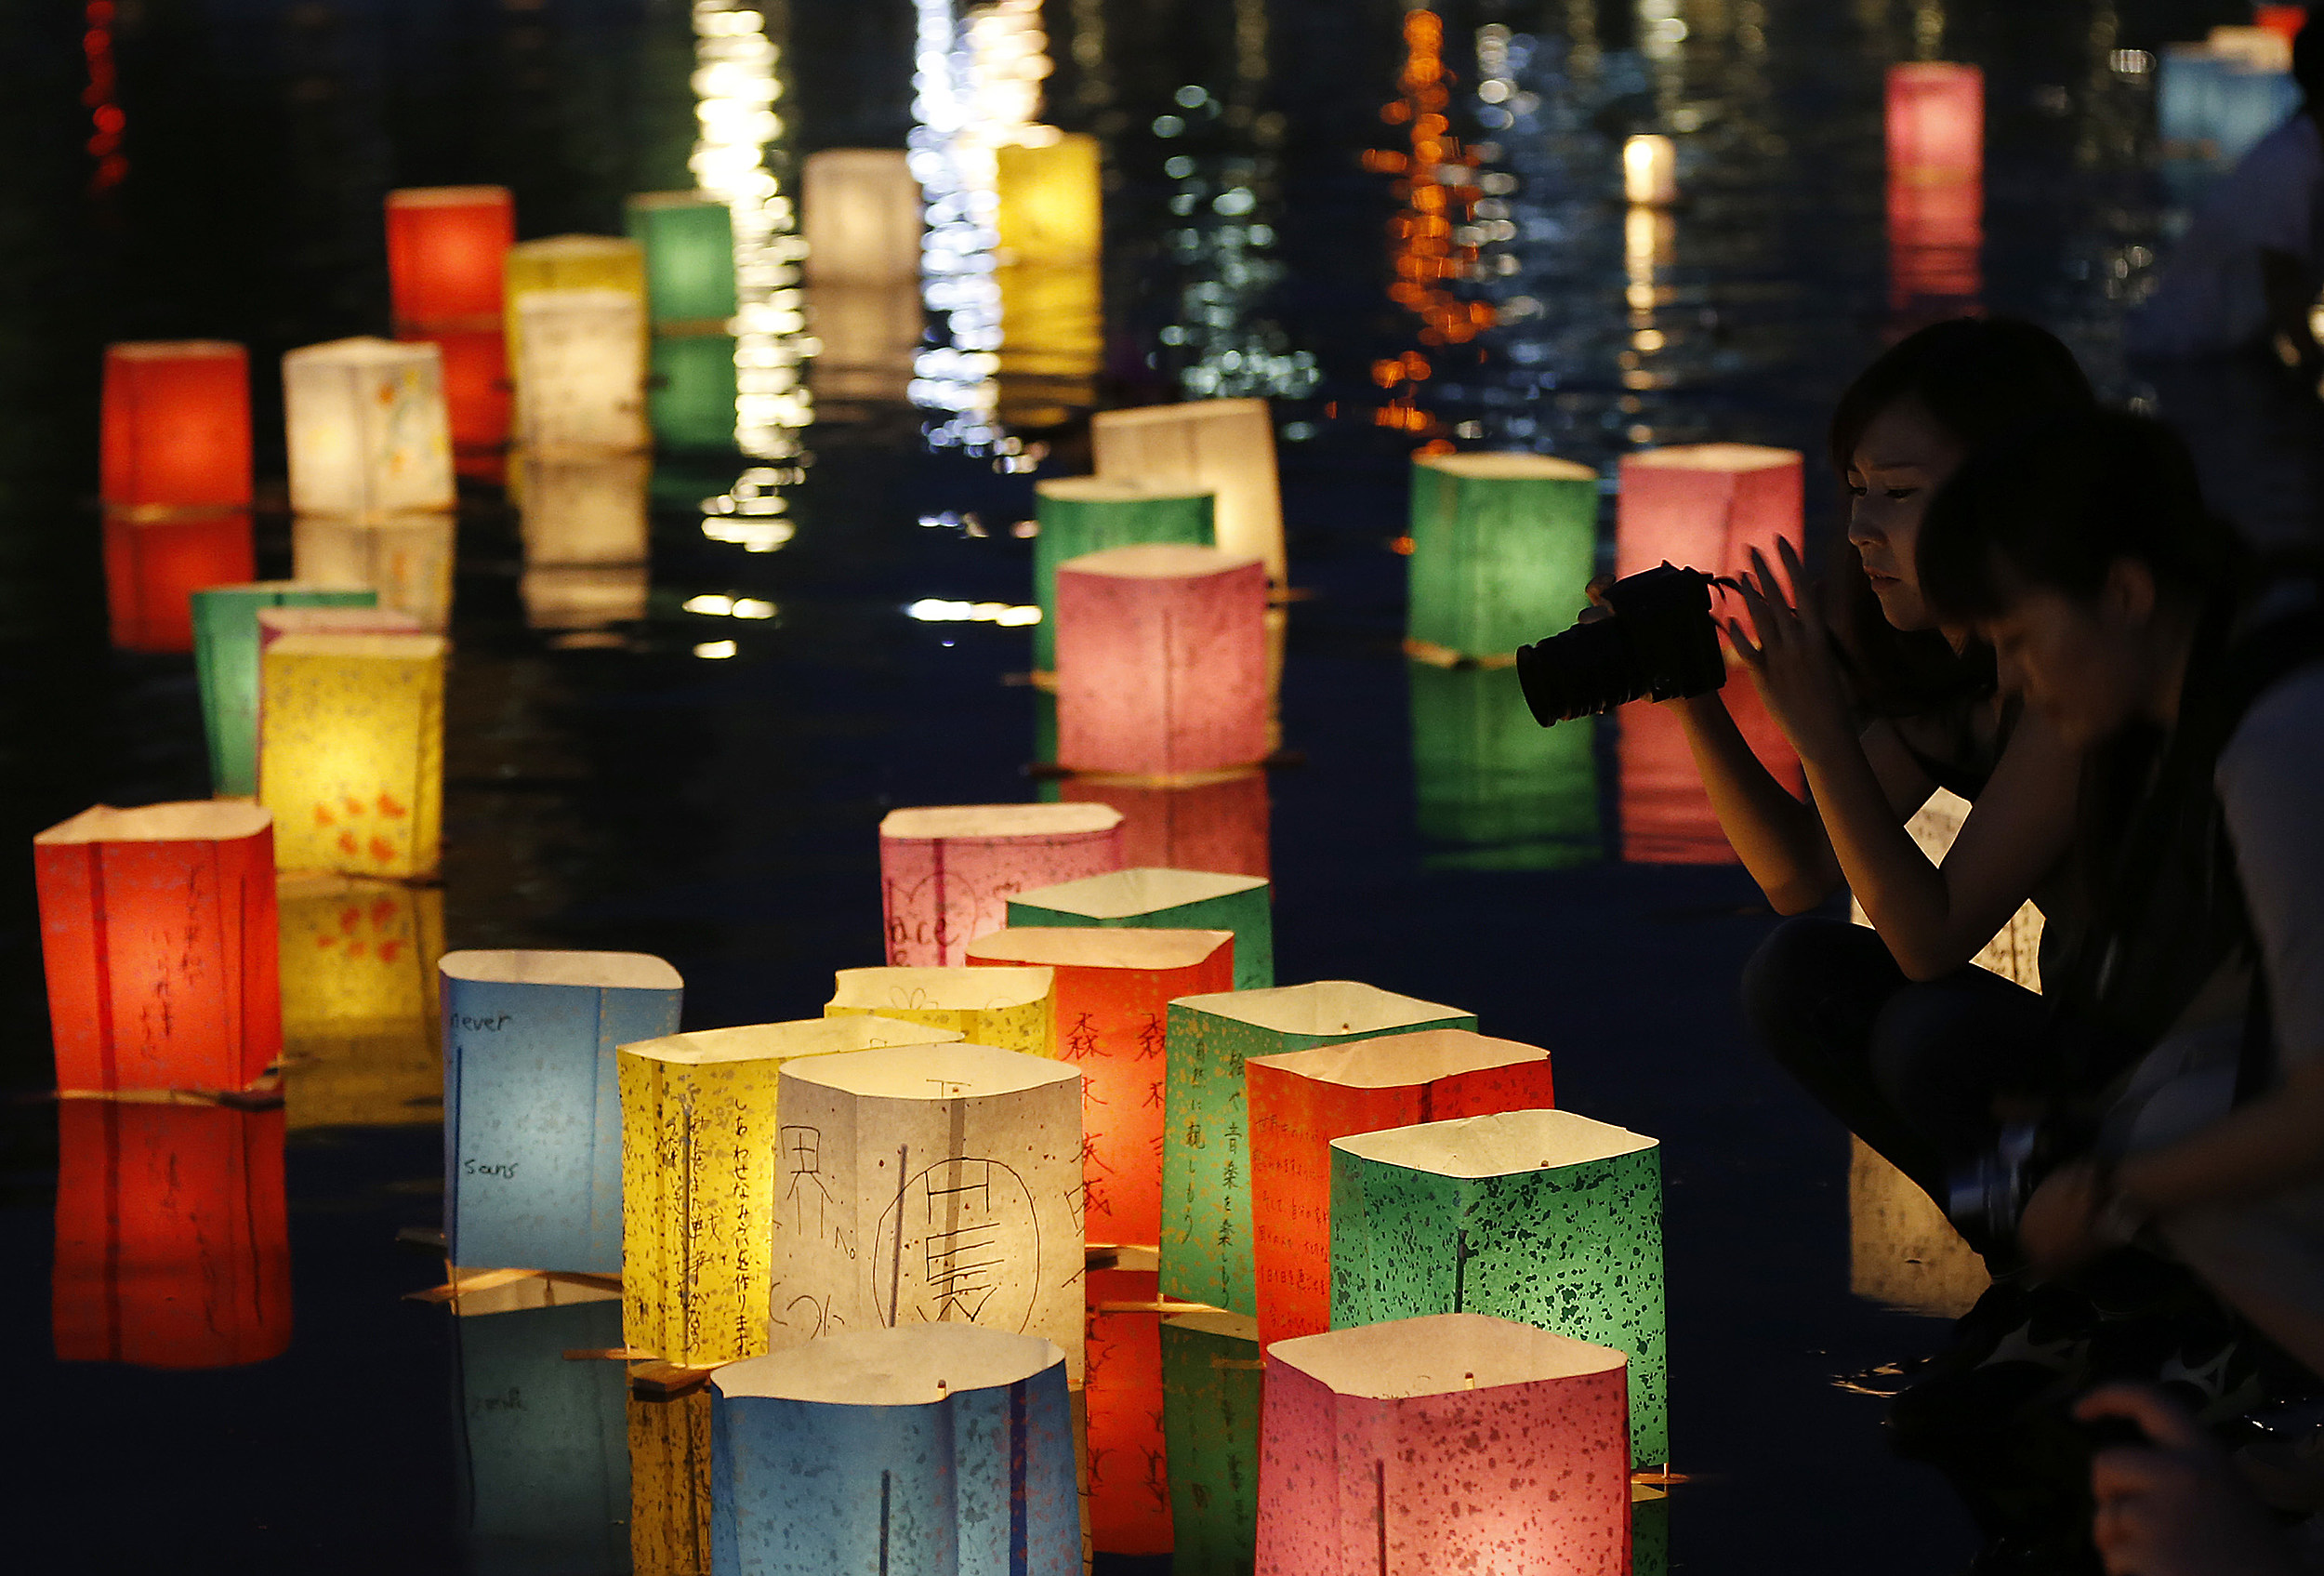 escondido water lantern festival